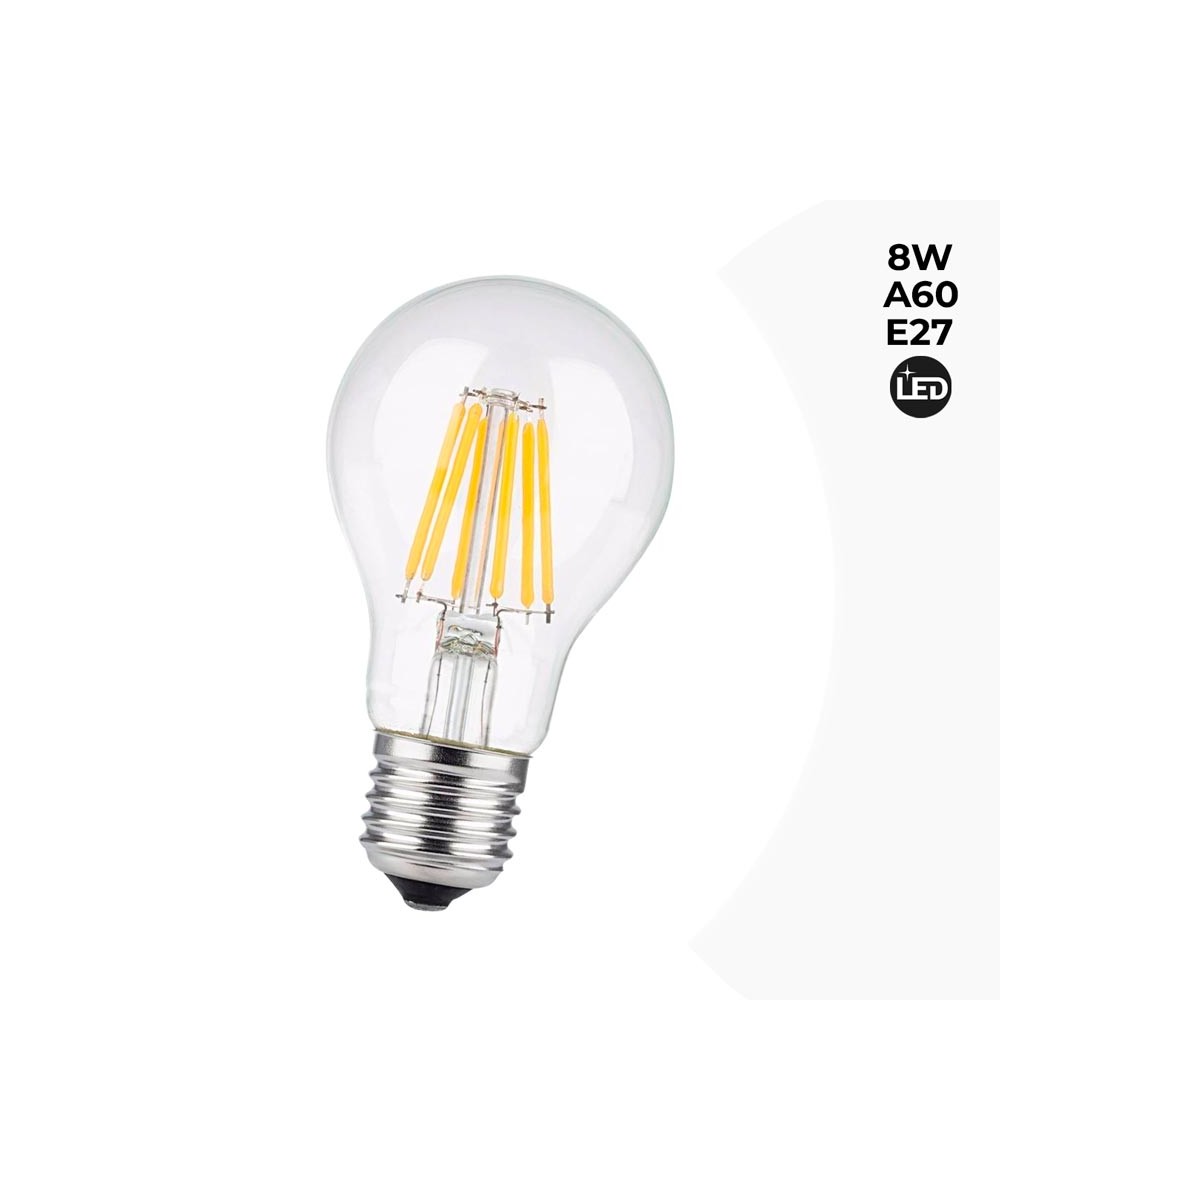 LED filament bulb A60 E27 8W transparent